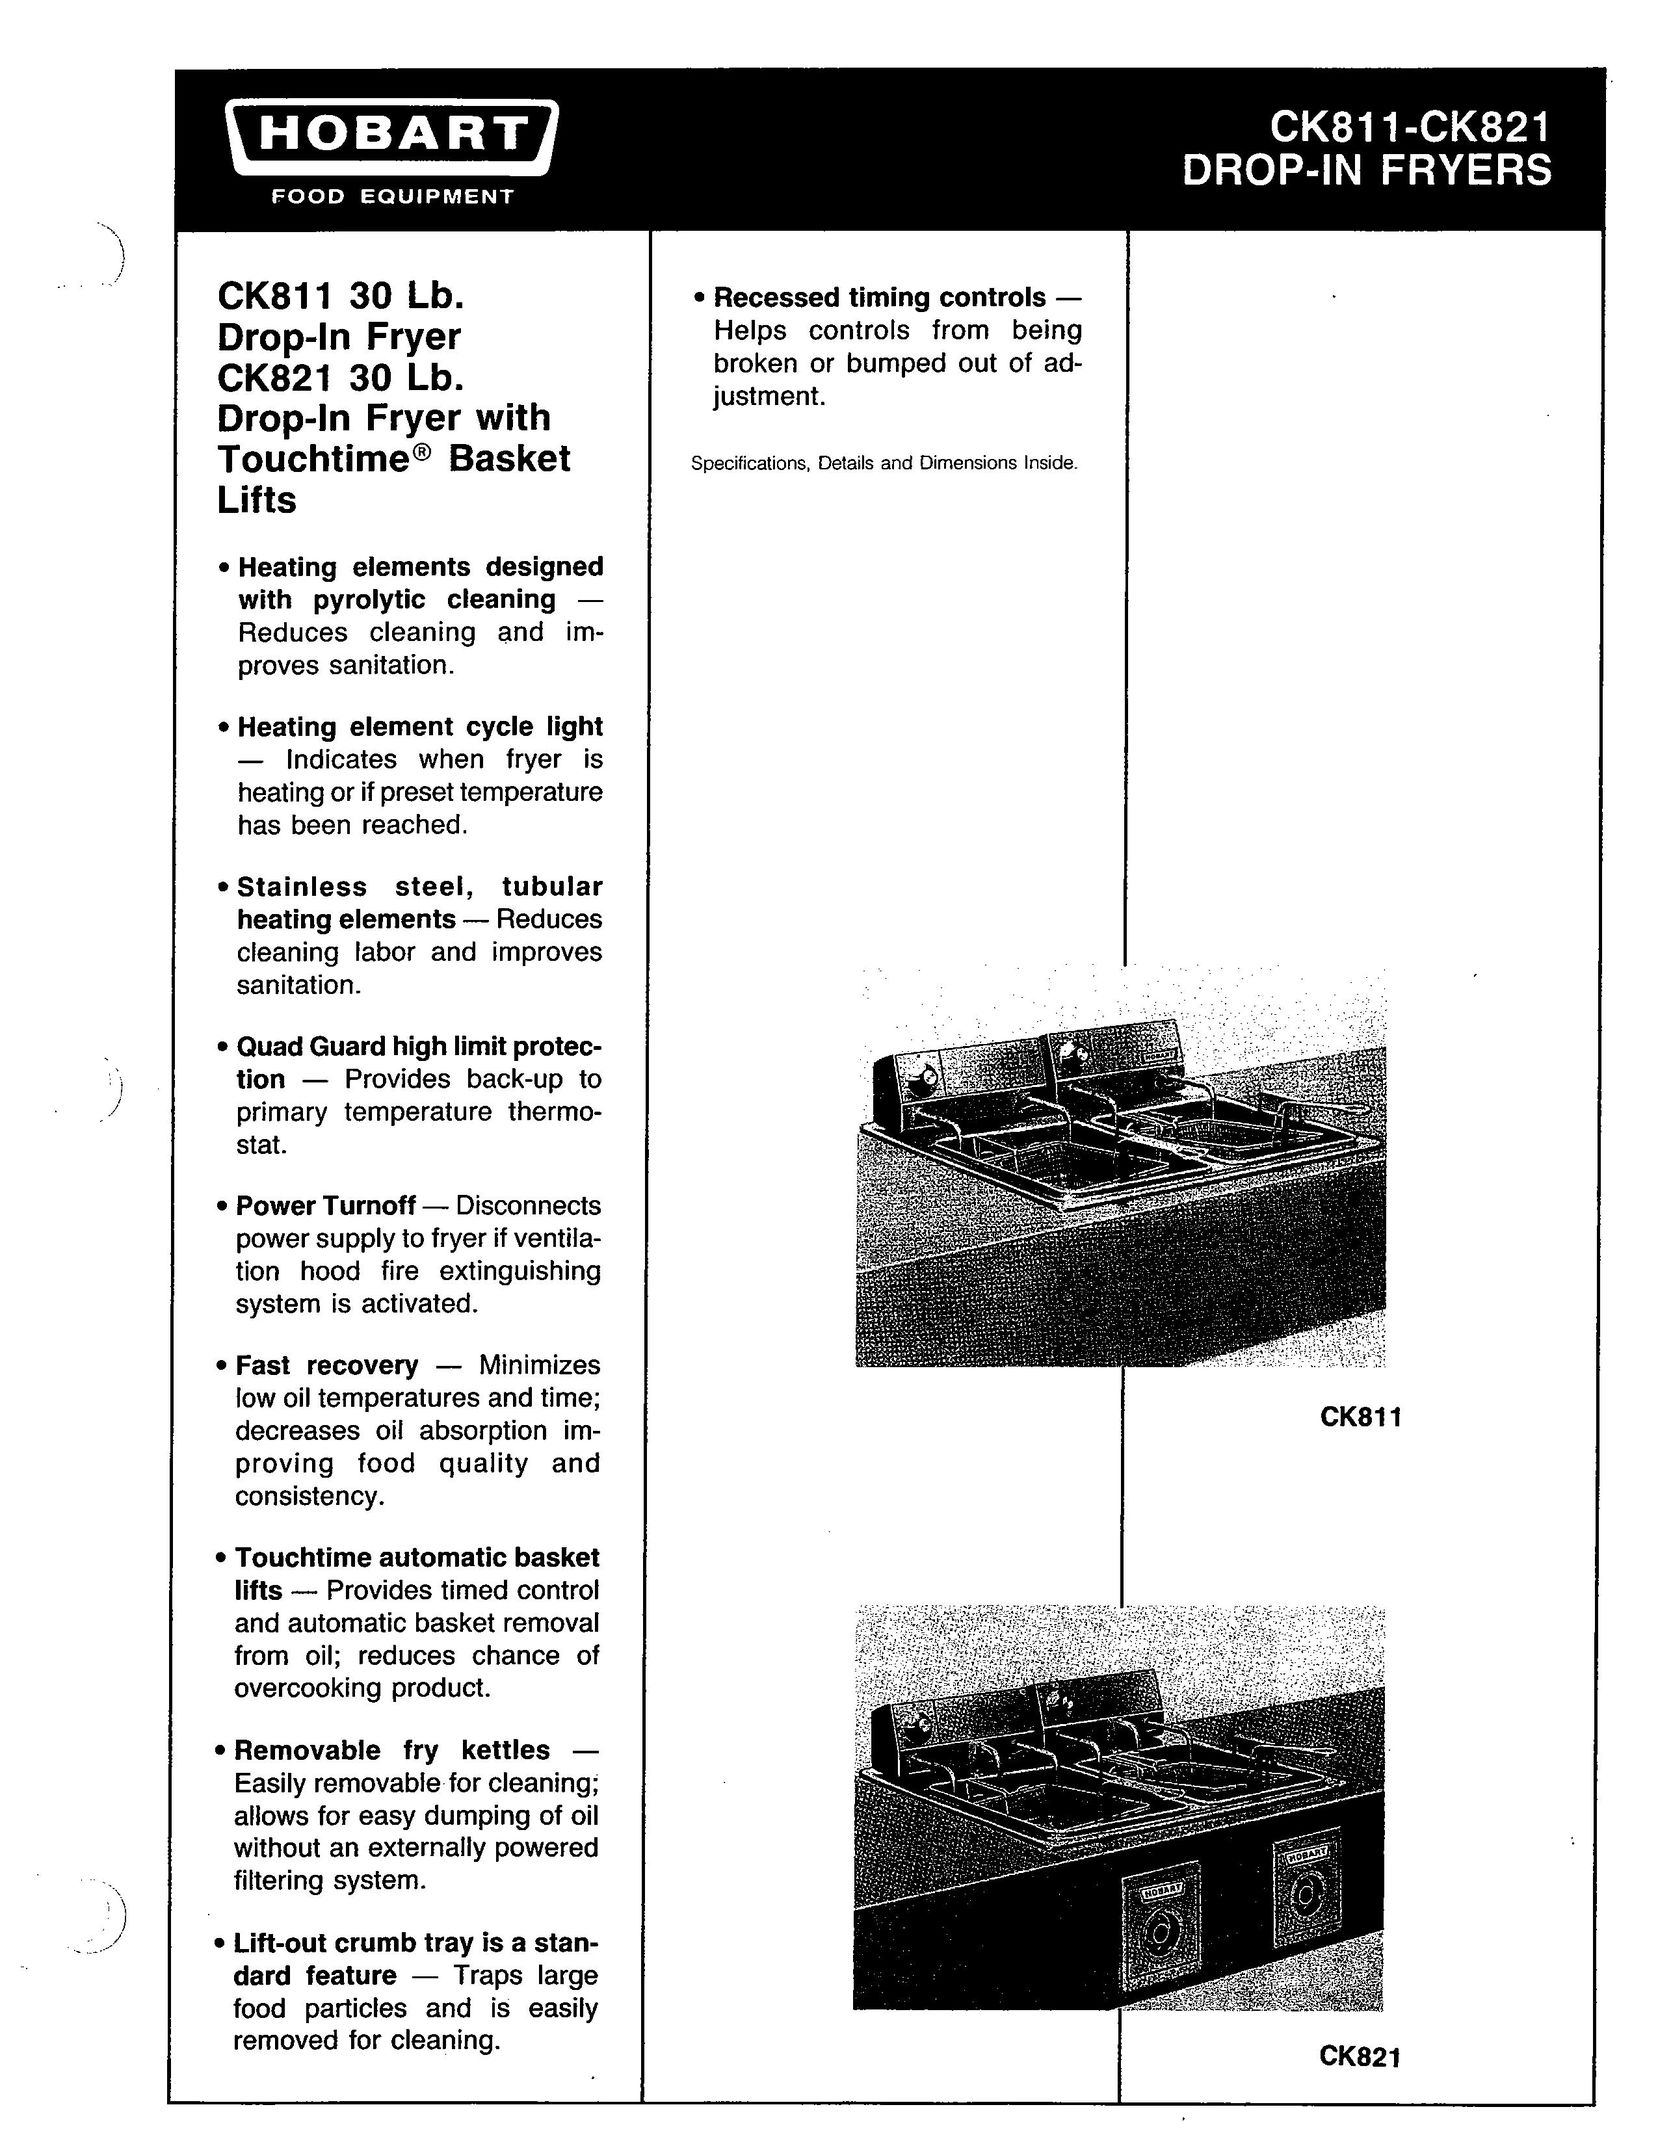 Hobart CK821 Fryer User Manual